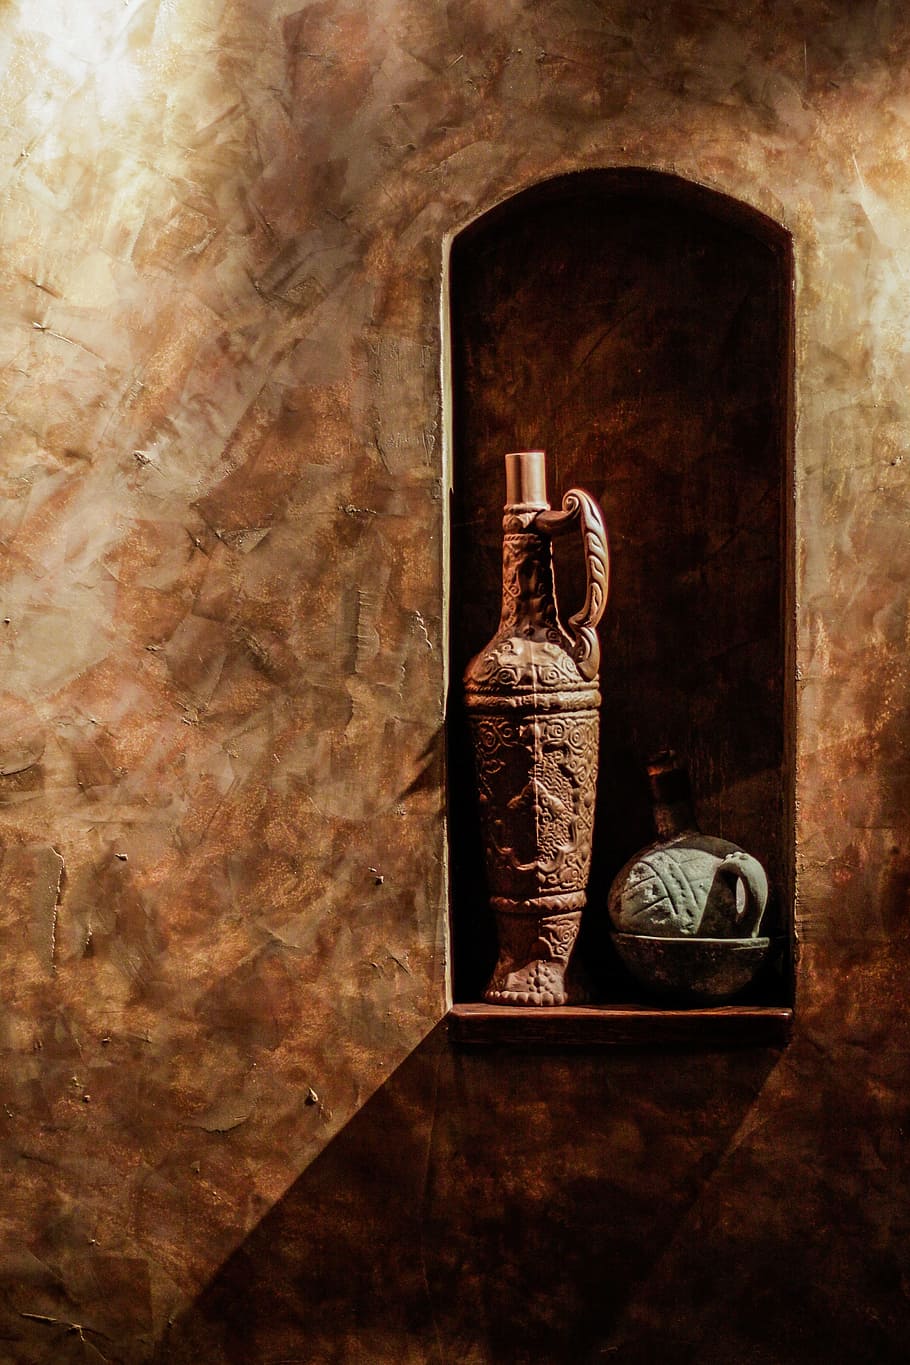 brown ceramic vase, brown, ceramic, vase, wine, bottles, wall, wine bottle, old, historic